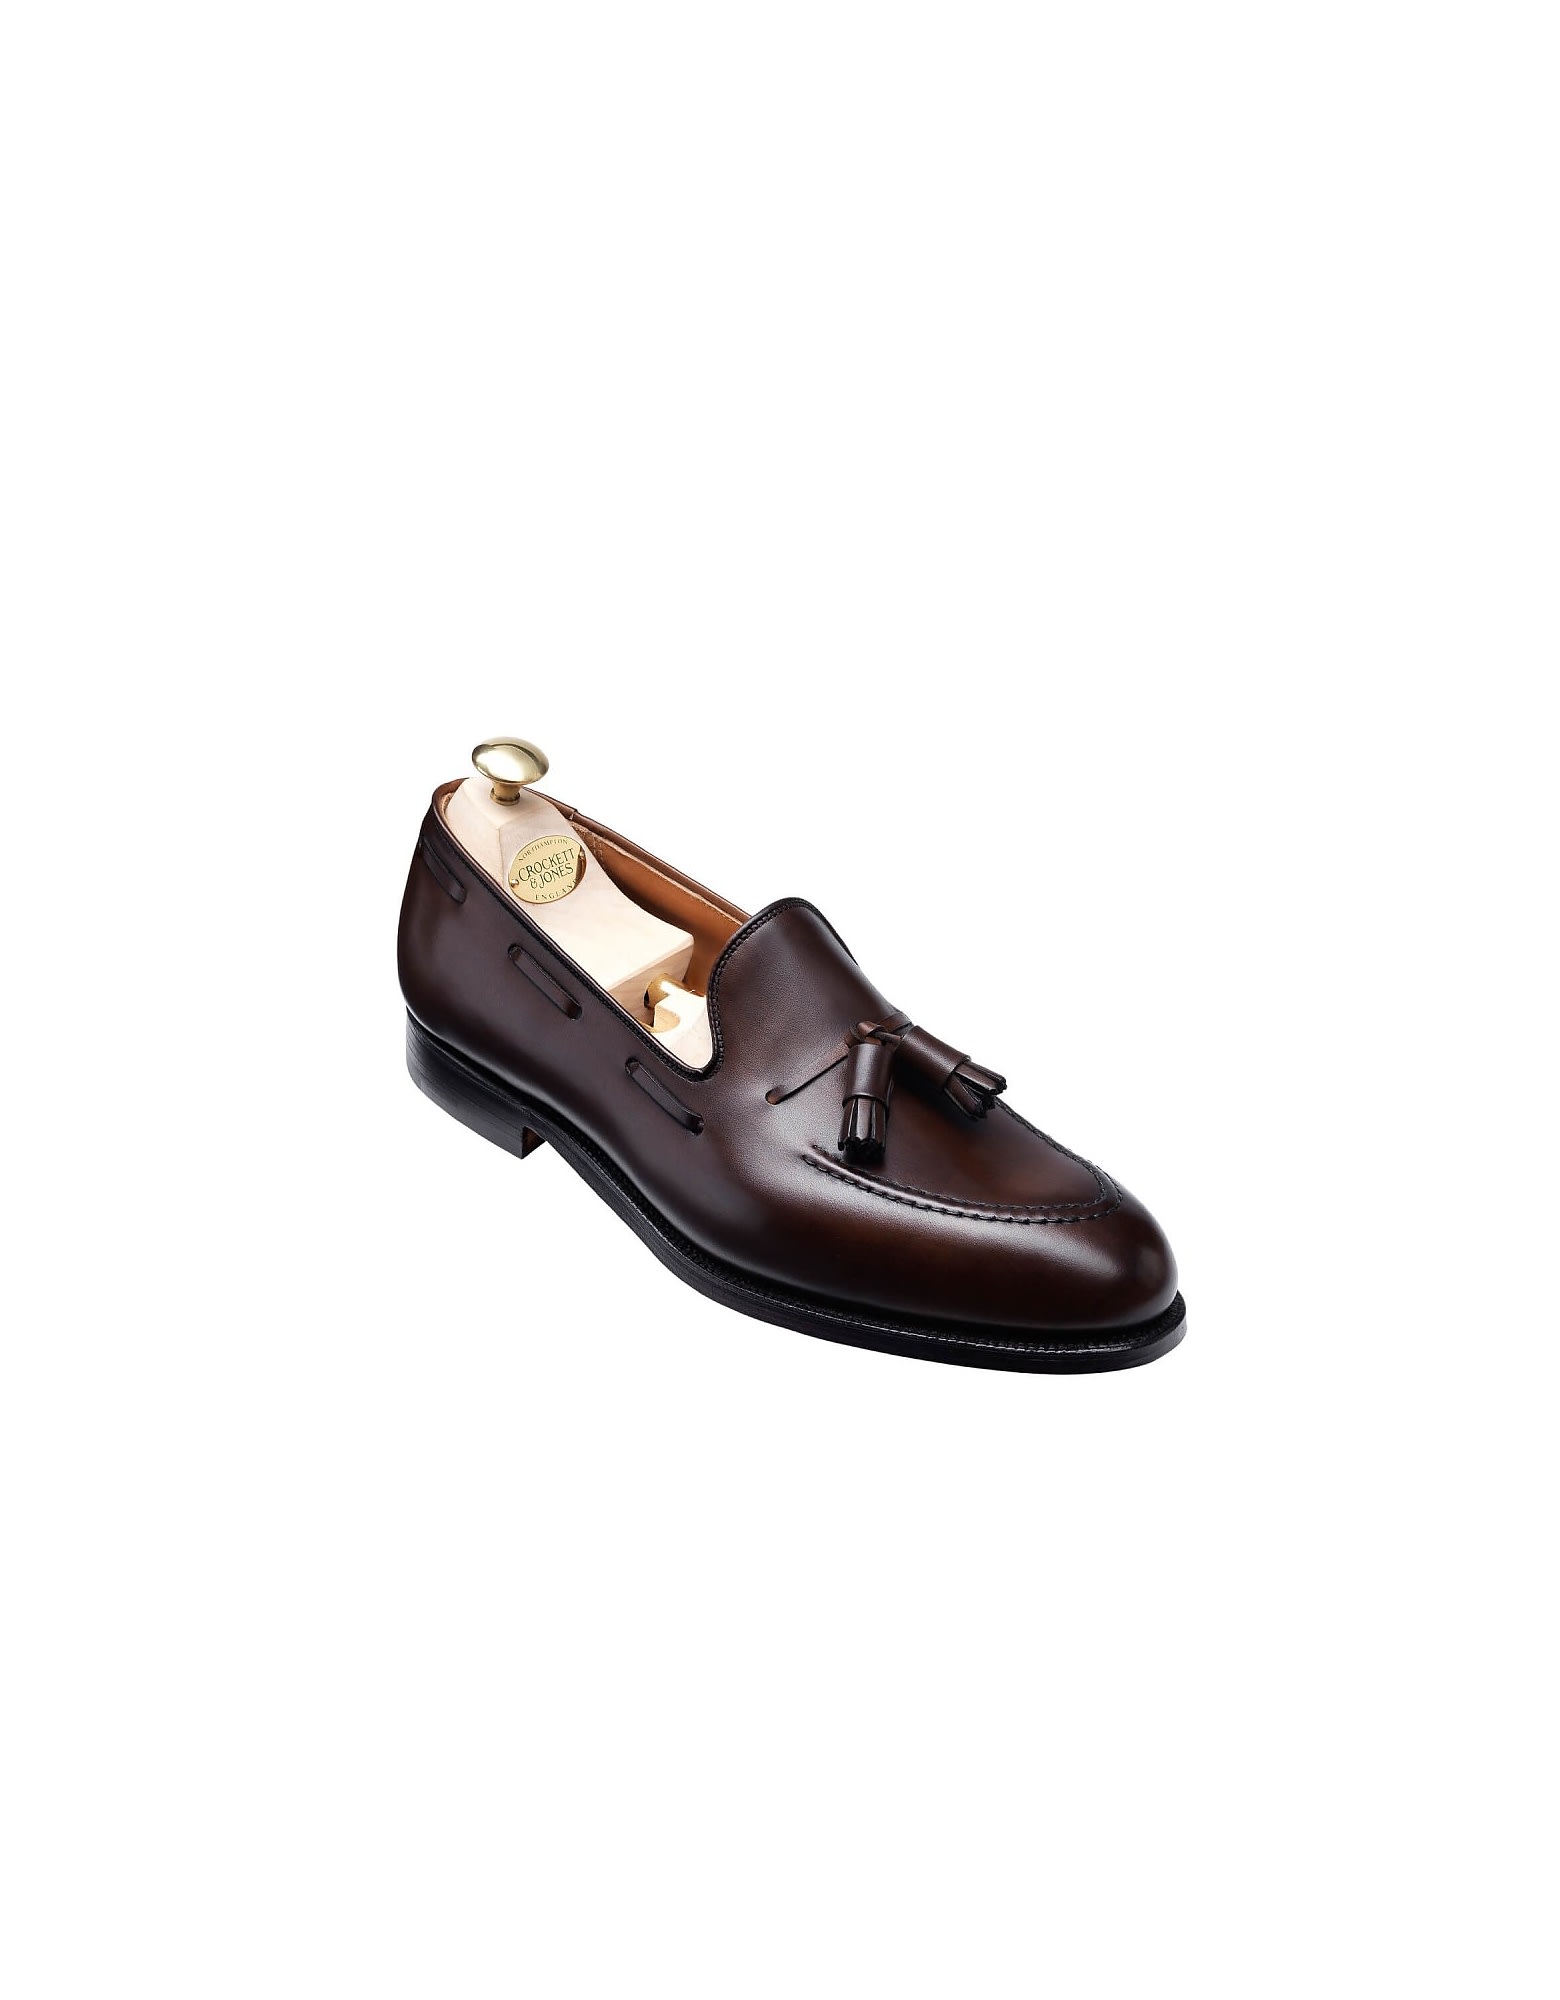 Crockett & Jones Cavendish Dark Brown Leather Mens Loafer Shoes